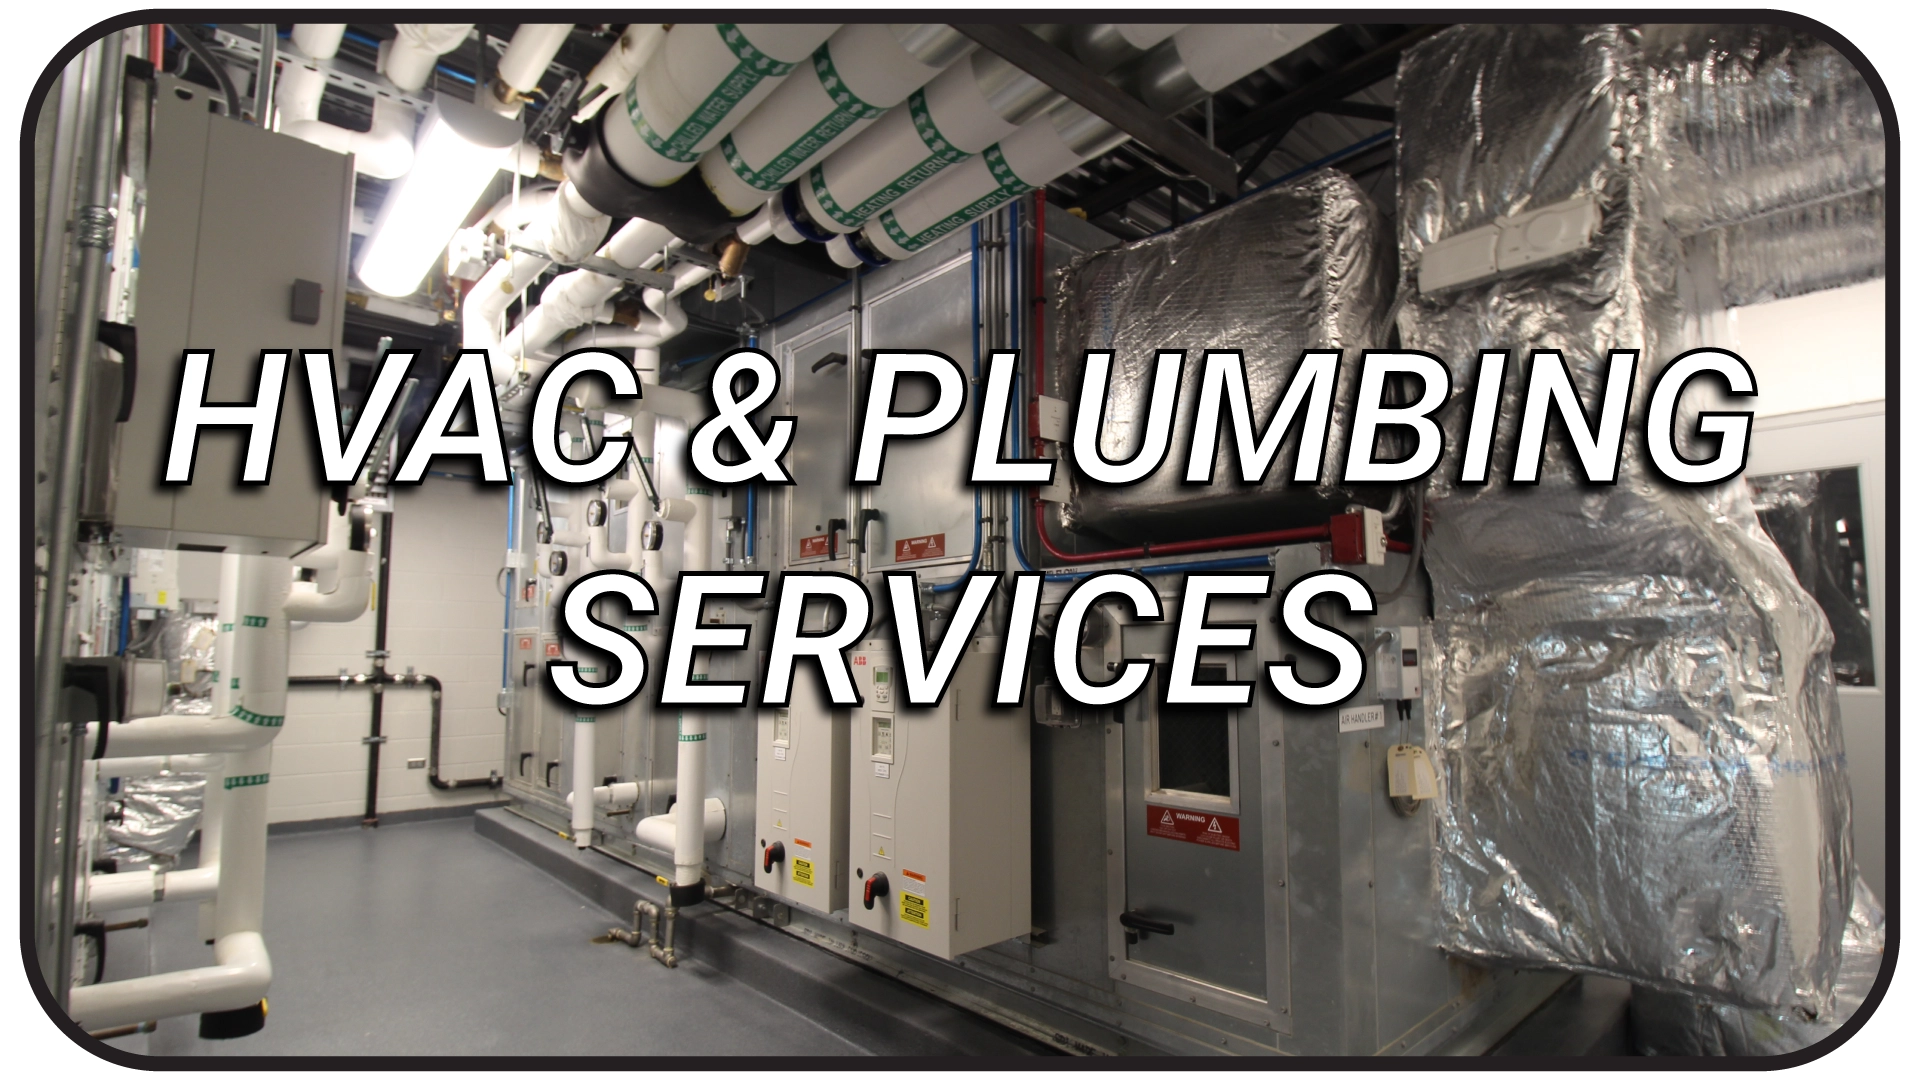 HVAC & Plumbing services